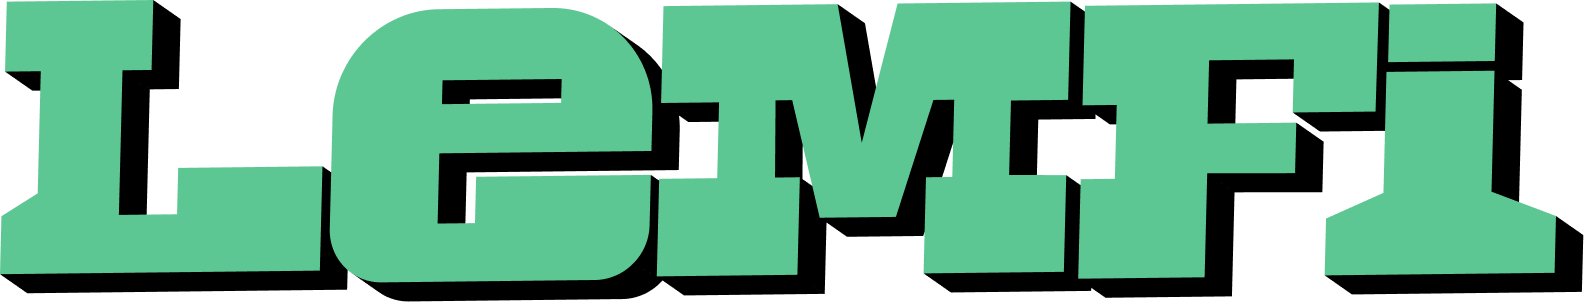 Lemfi logo
